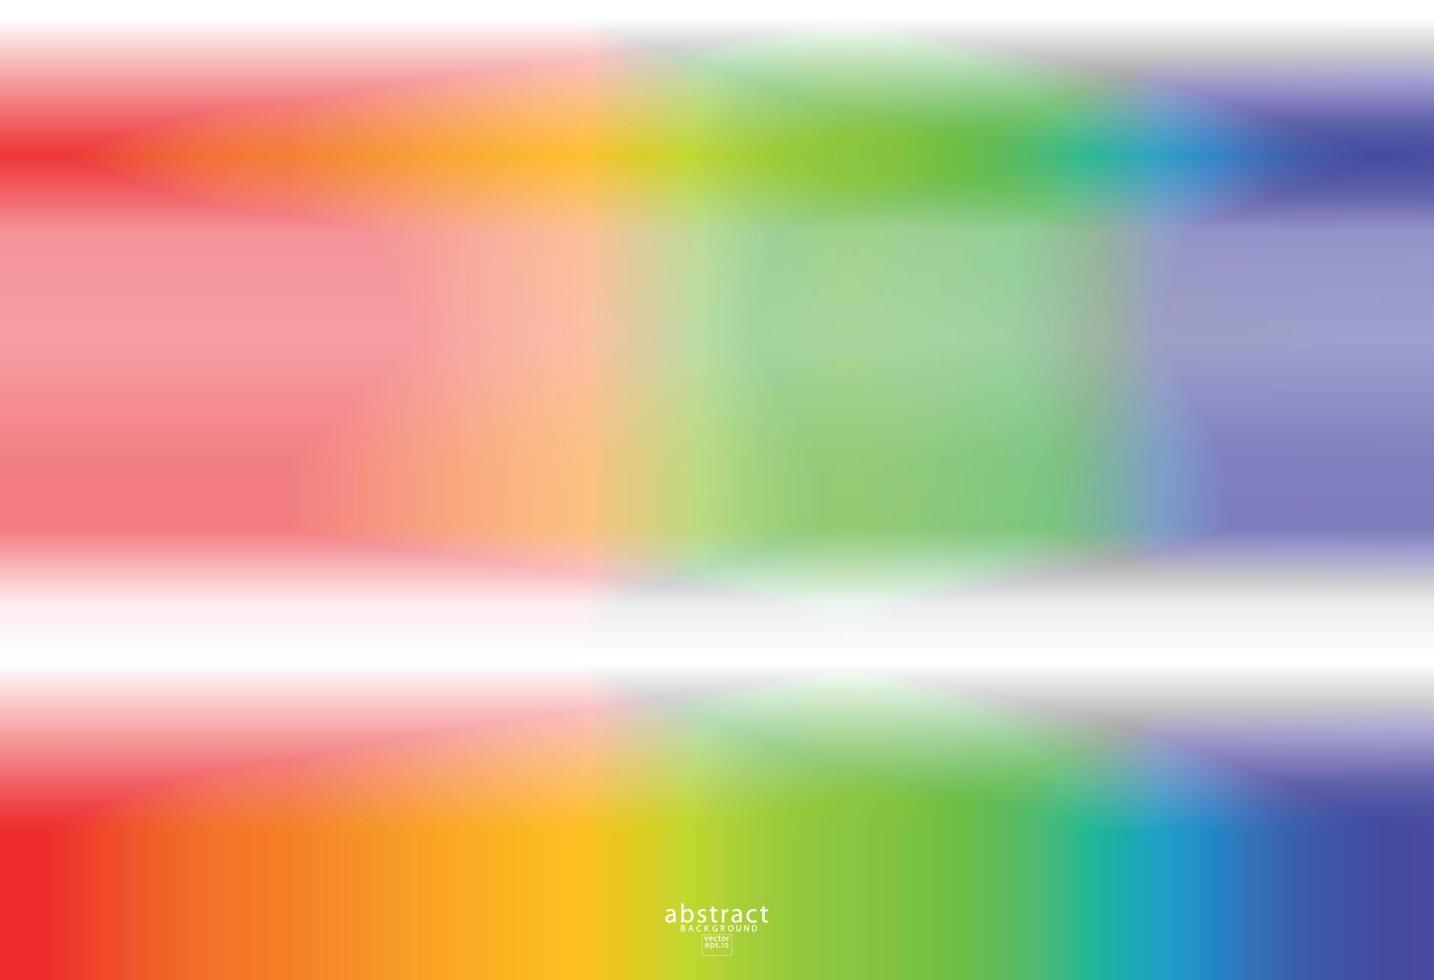 Resumo turva gradiente malha fundo cores brilhantes do arco-íris. modelo de banner macio suave colorido. ilustração vetorial vibrante criativa vetor